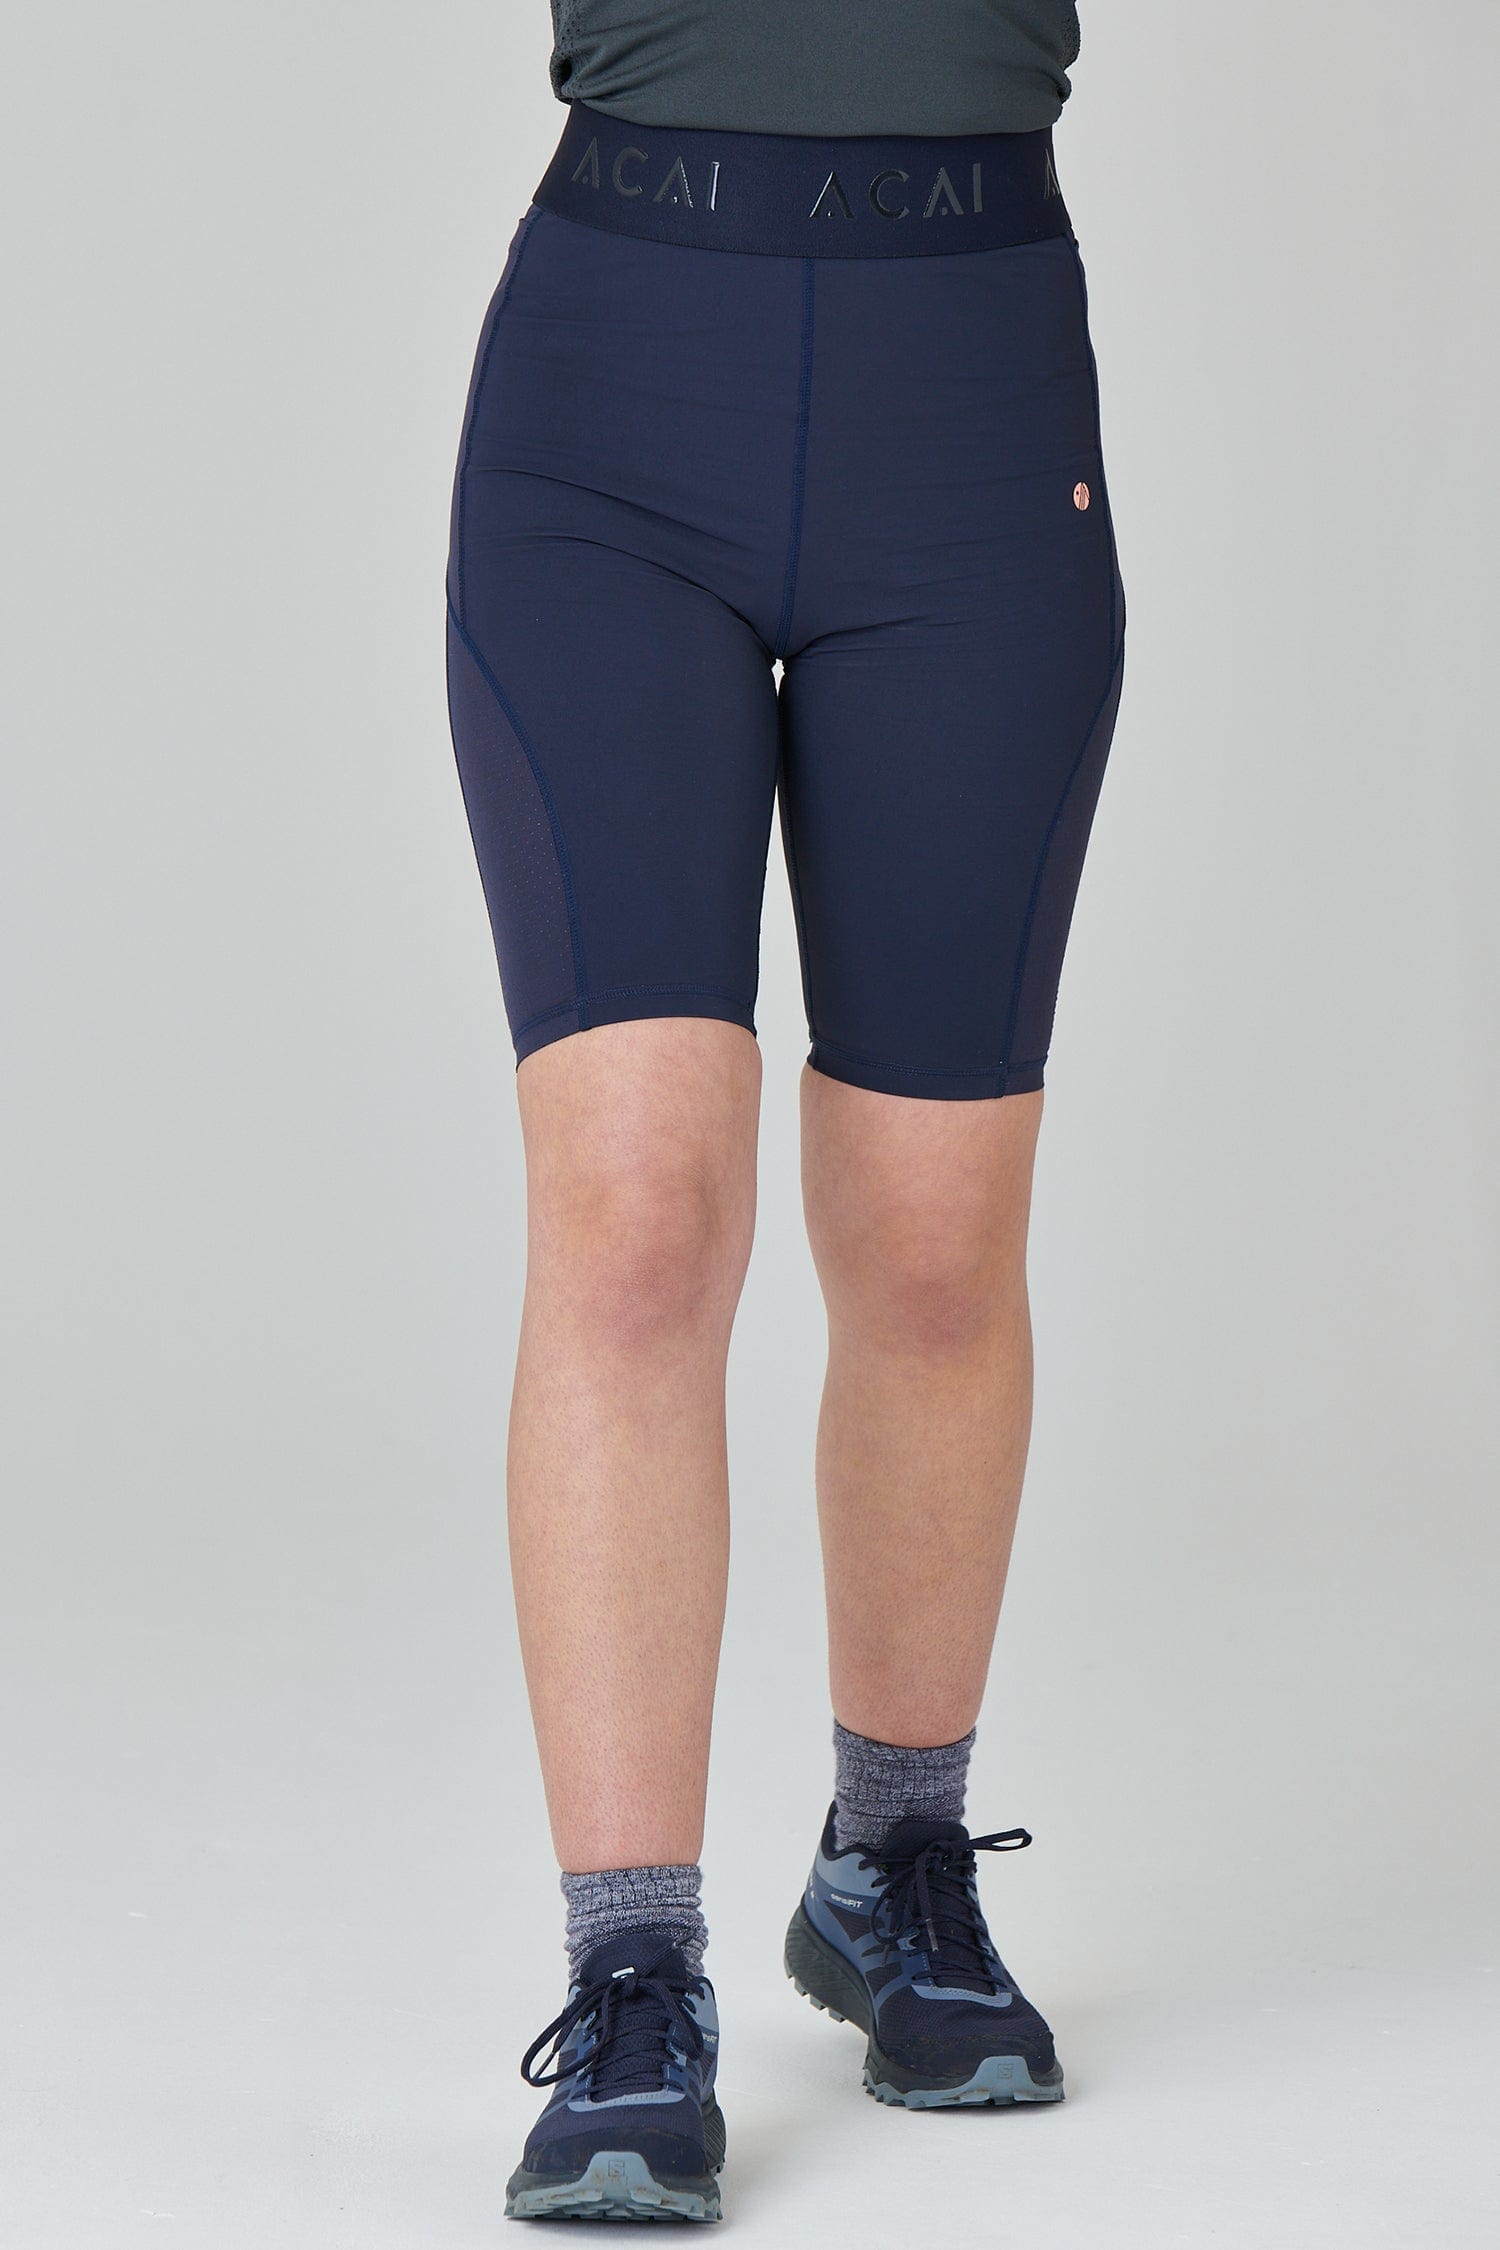 The Panelled Shorts- Midnight Blue - Xxsmall / Uk6 - Womens - Acai Outdoorwear